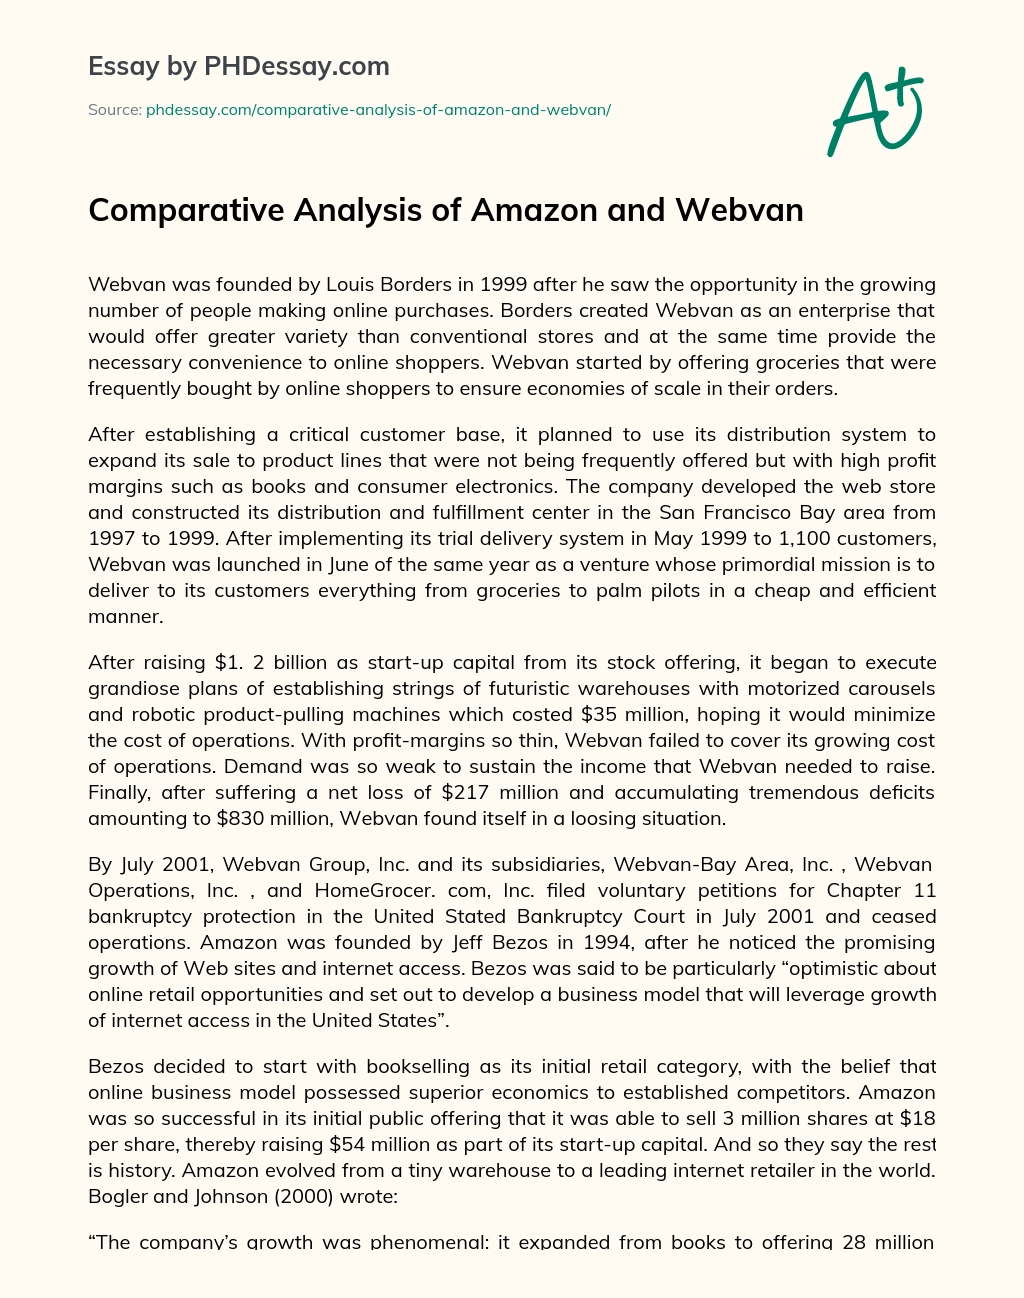 Comparative Analysis of Amazon and Webvan essay